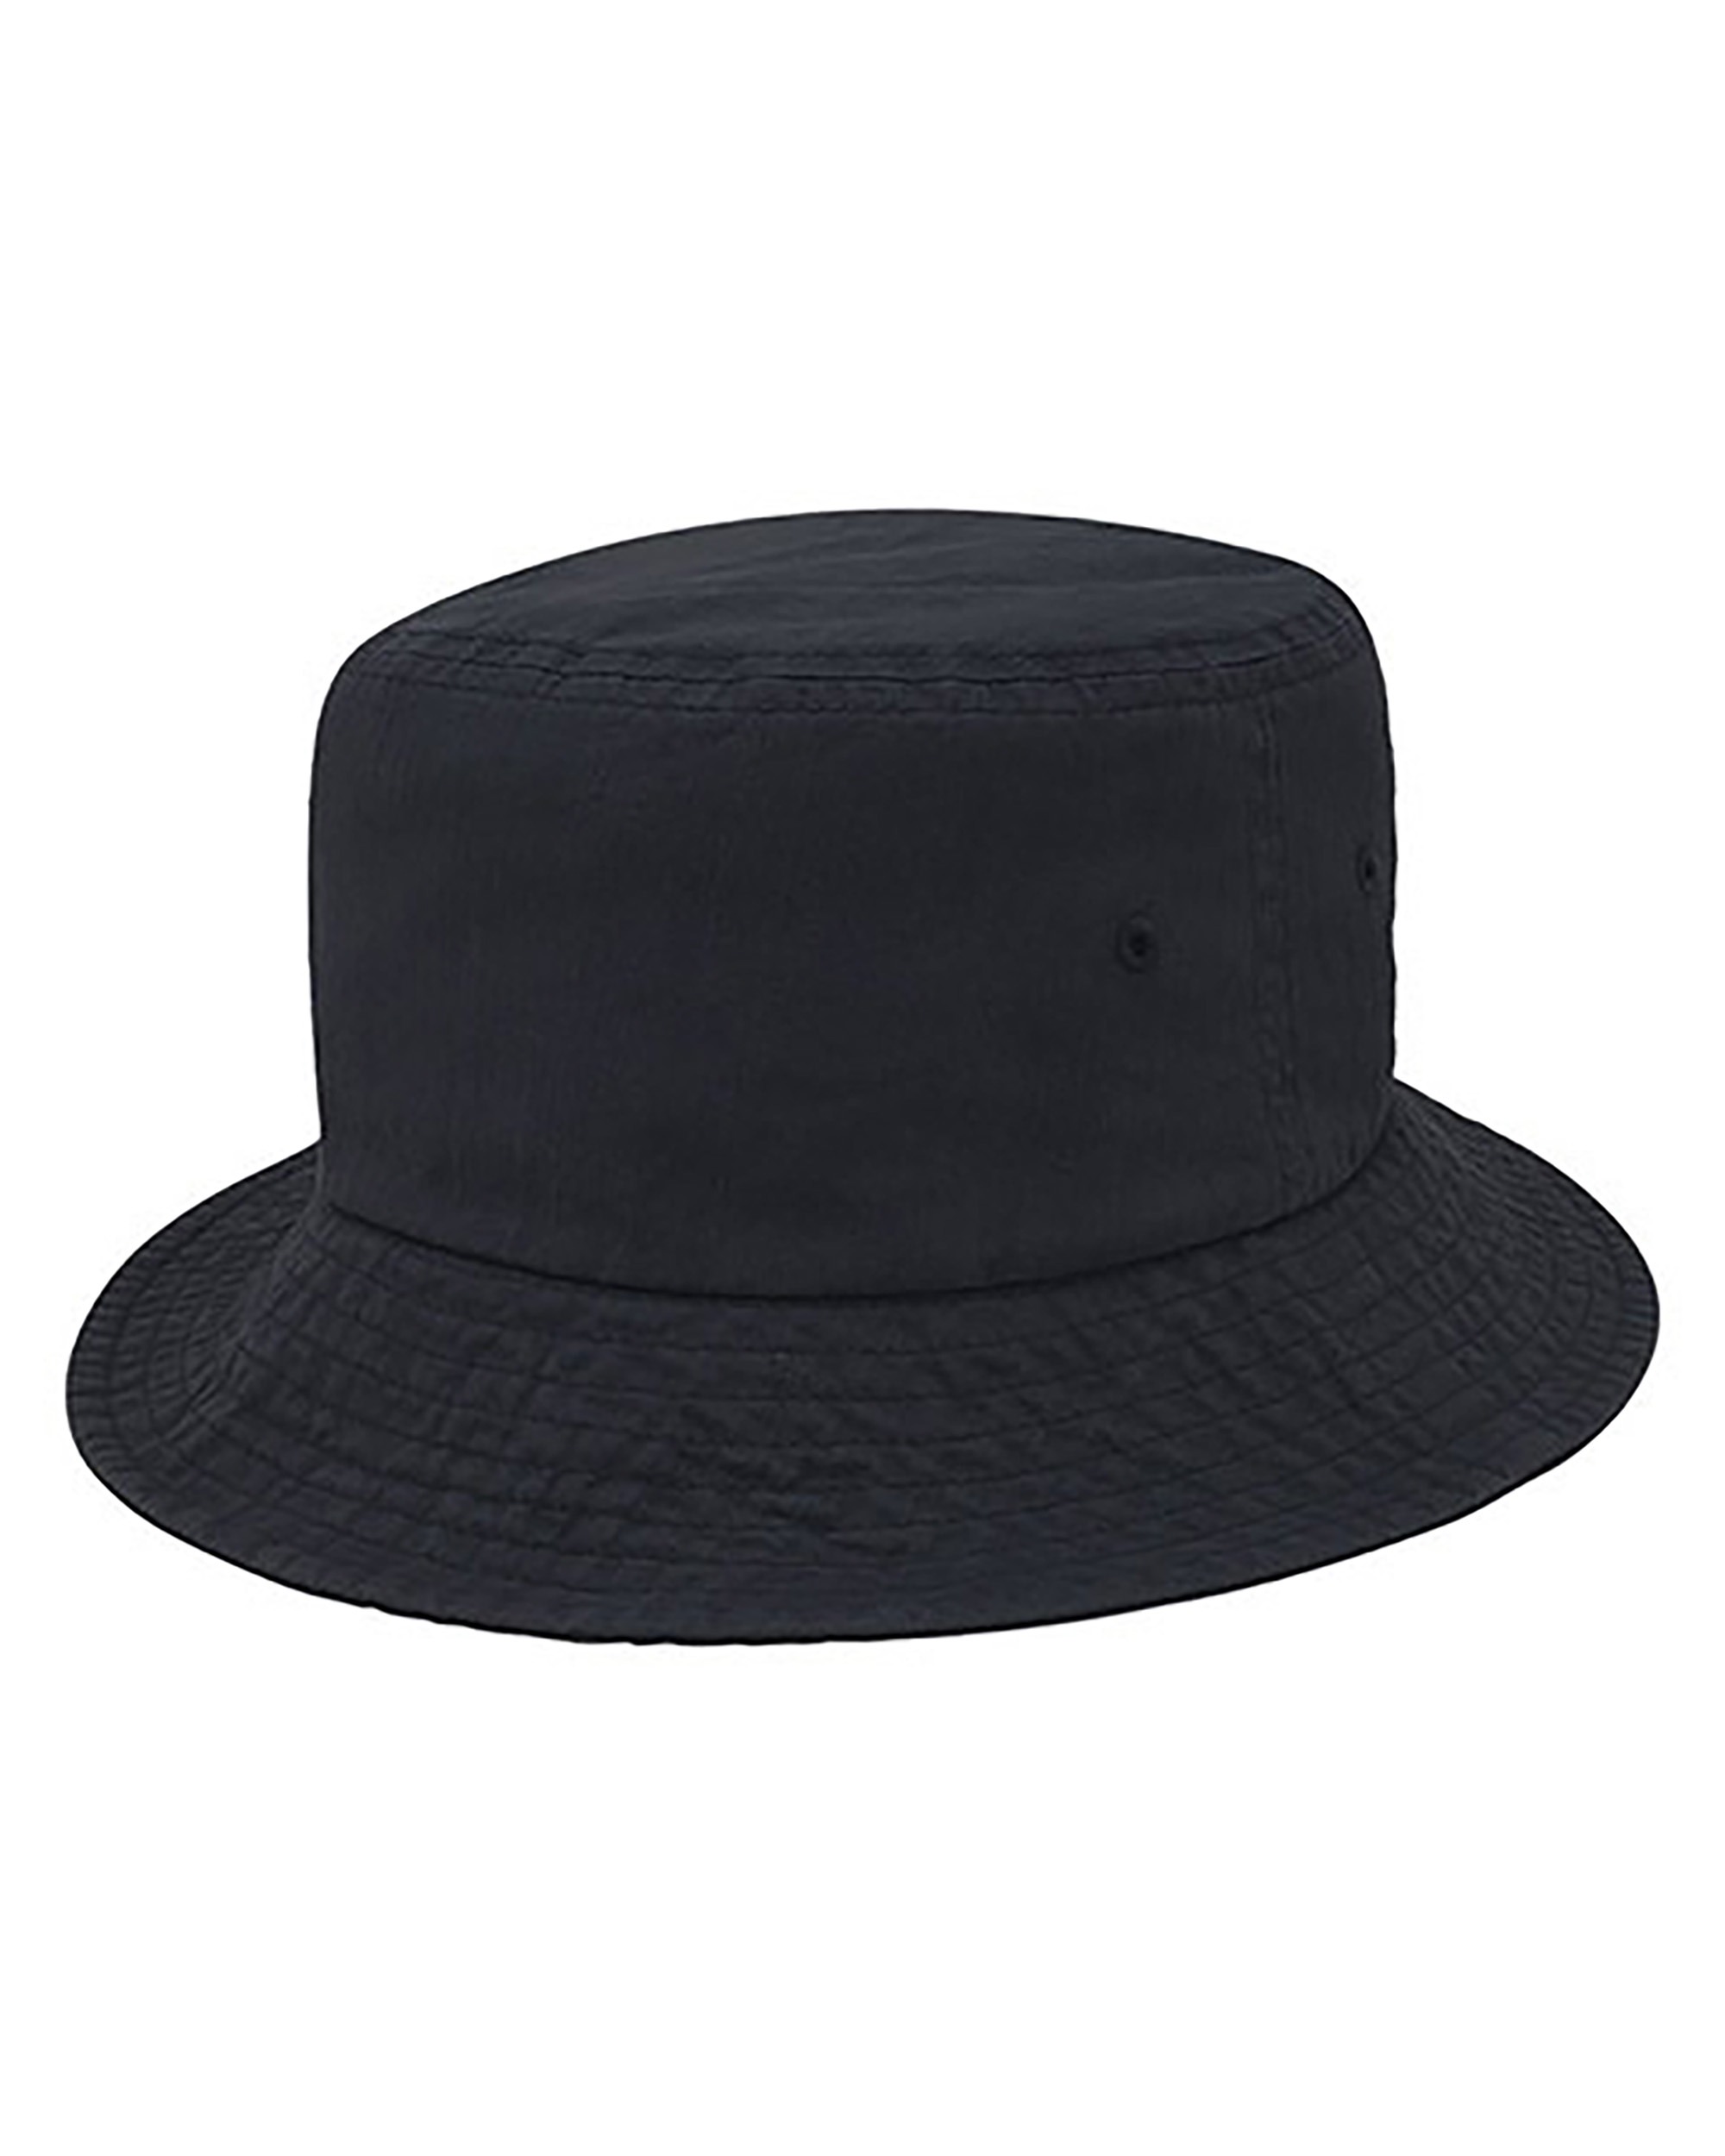 Mega Cap® 7850D Recycled Crosshatch Cotton Bucket Hat